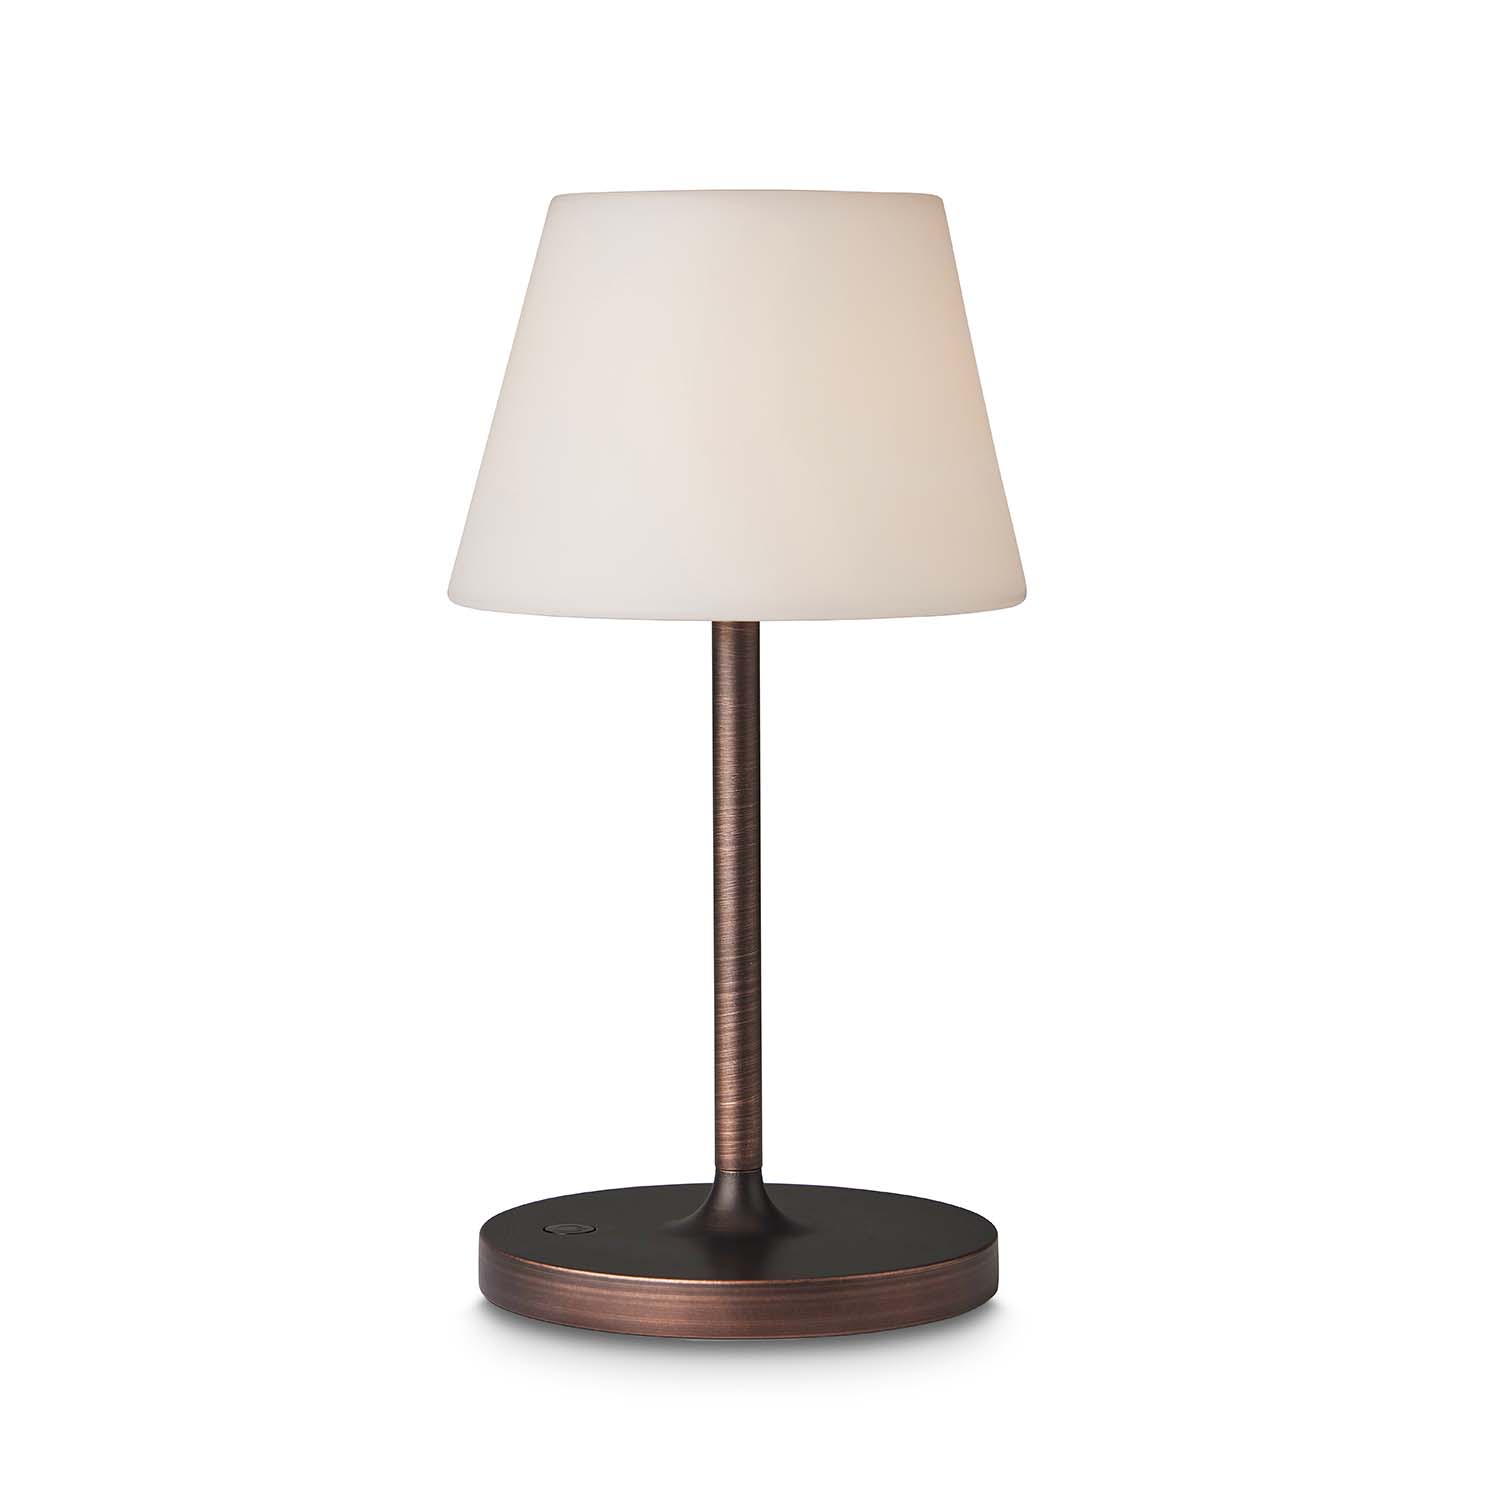 NEW NORTHERN - Wireless designer nomadic table lamp